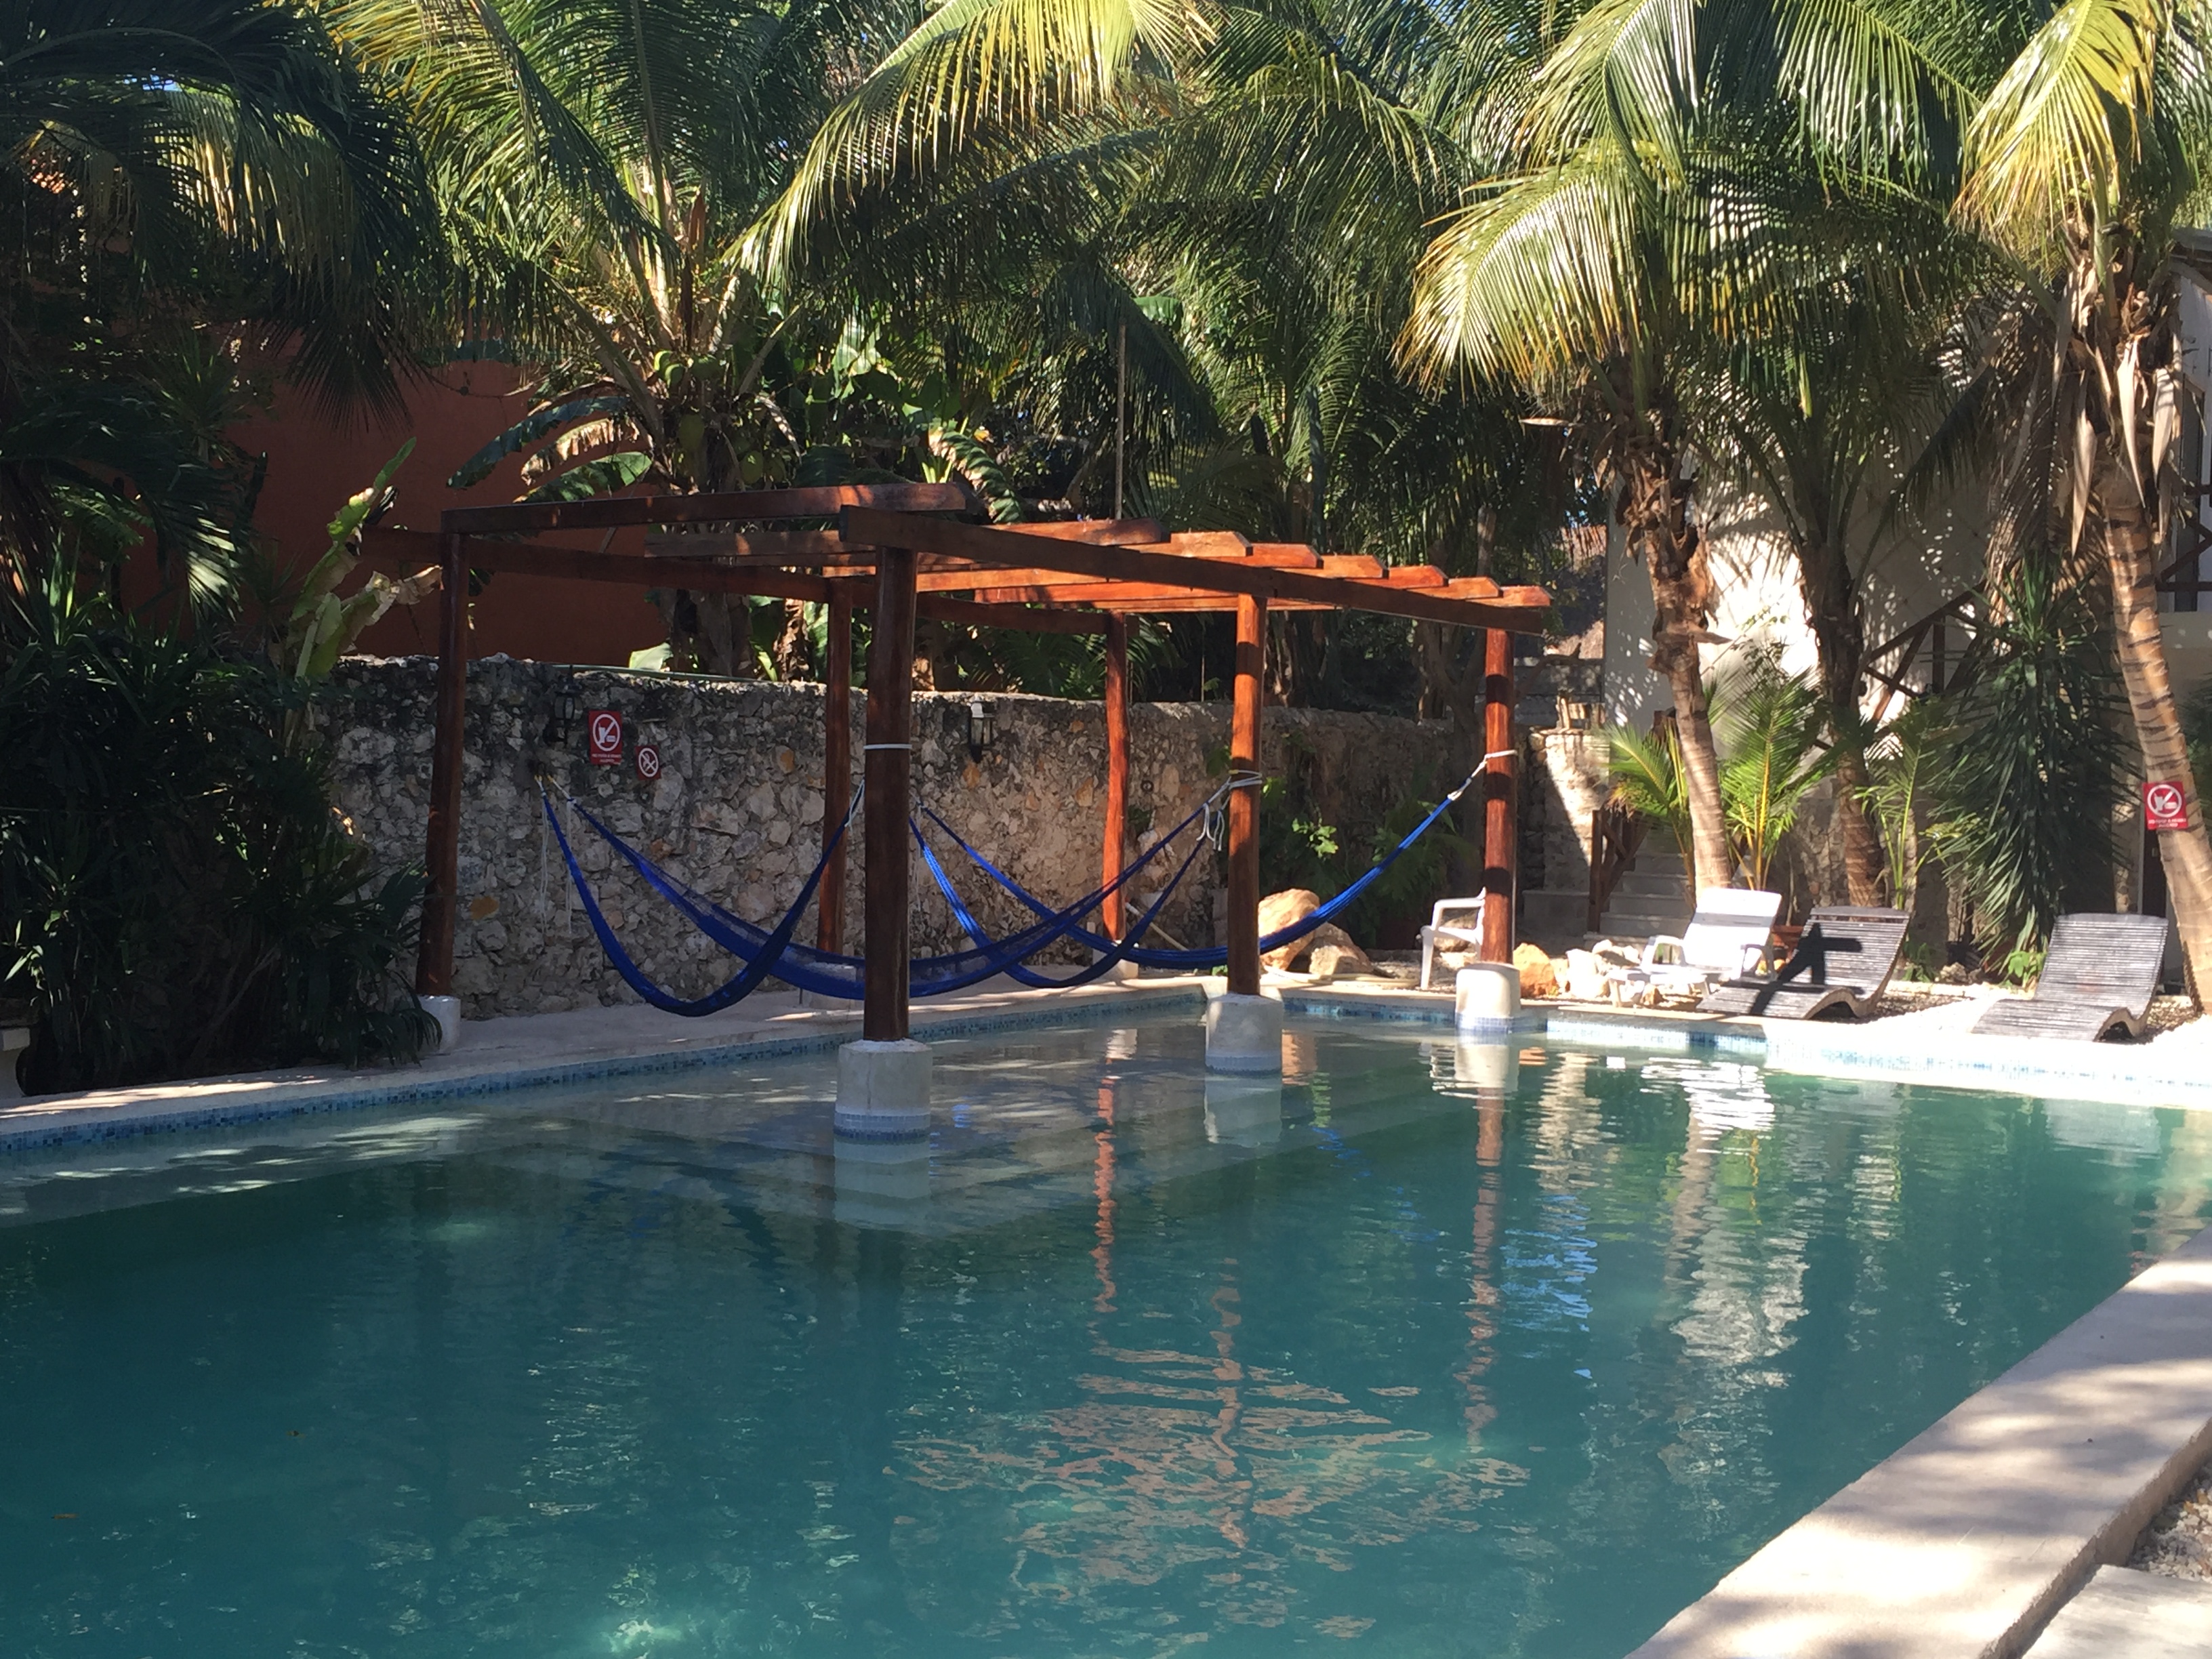 Day 4 – Merida, Mexico (Work & Relax)